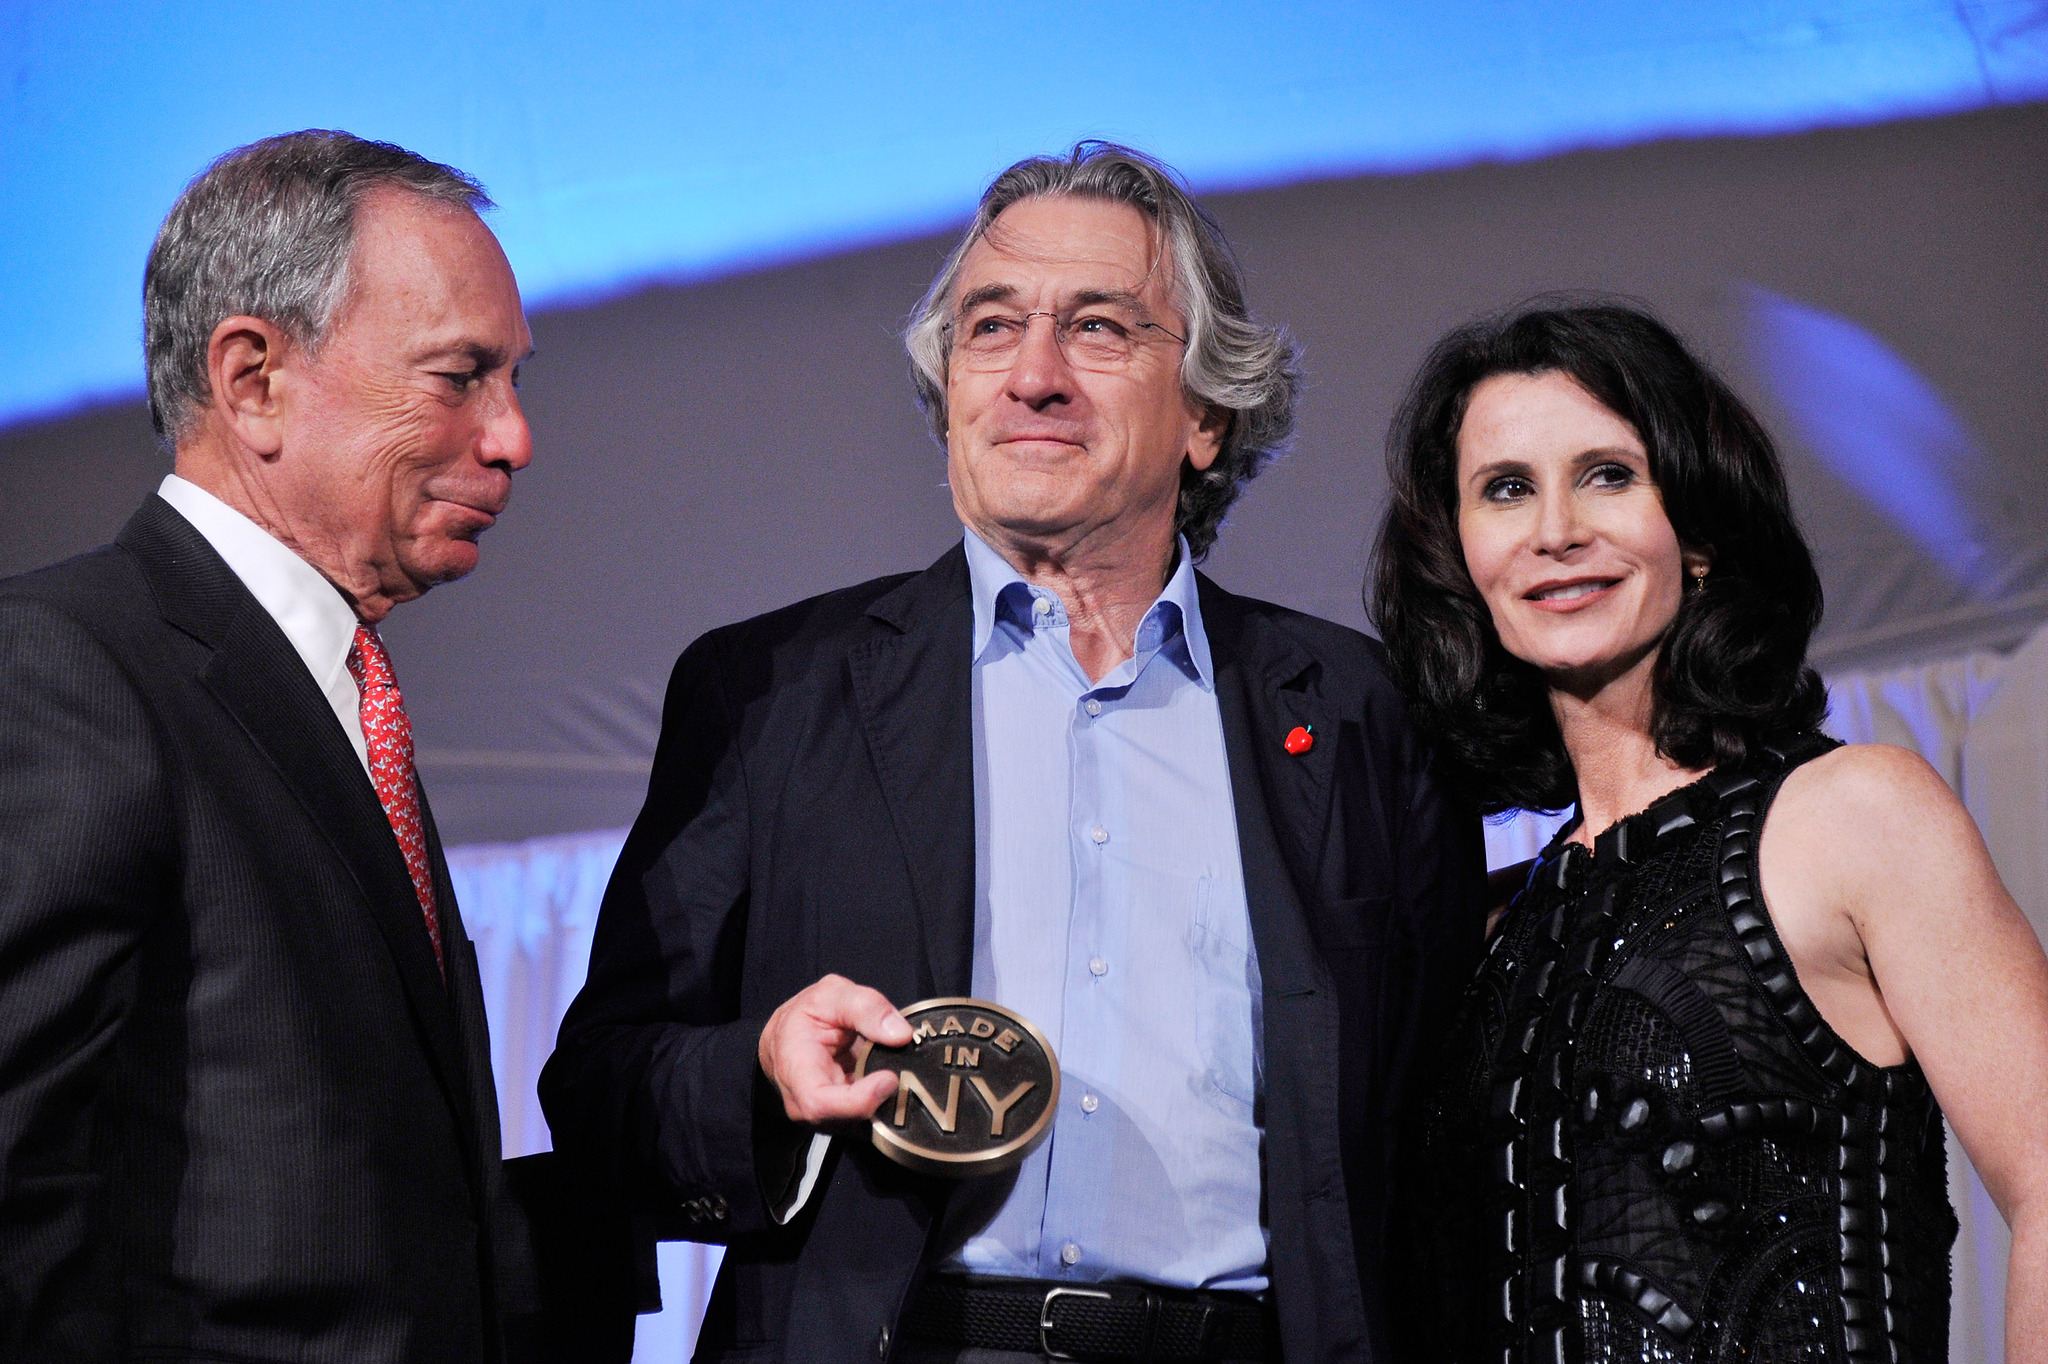 Robert De Niro, Michael Bloomberg and Katherine Oliver